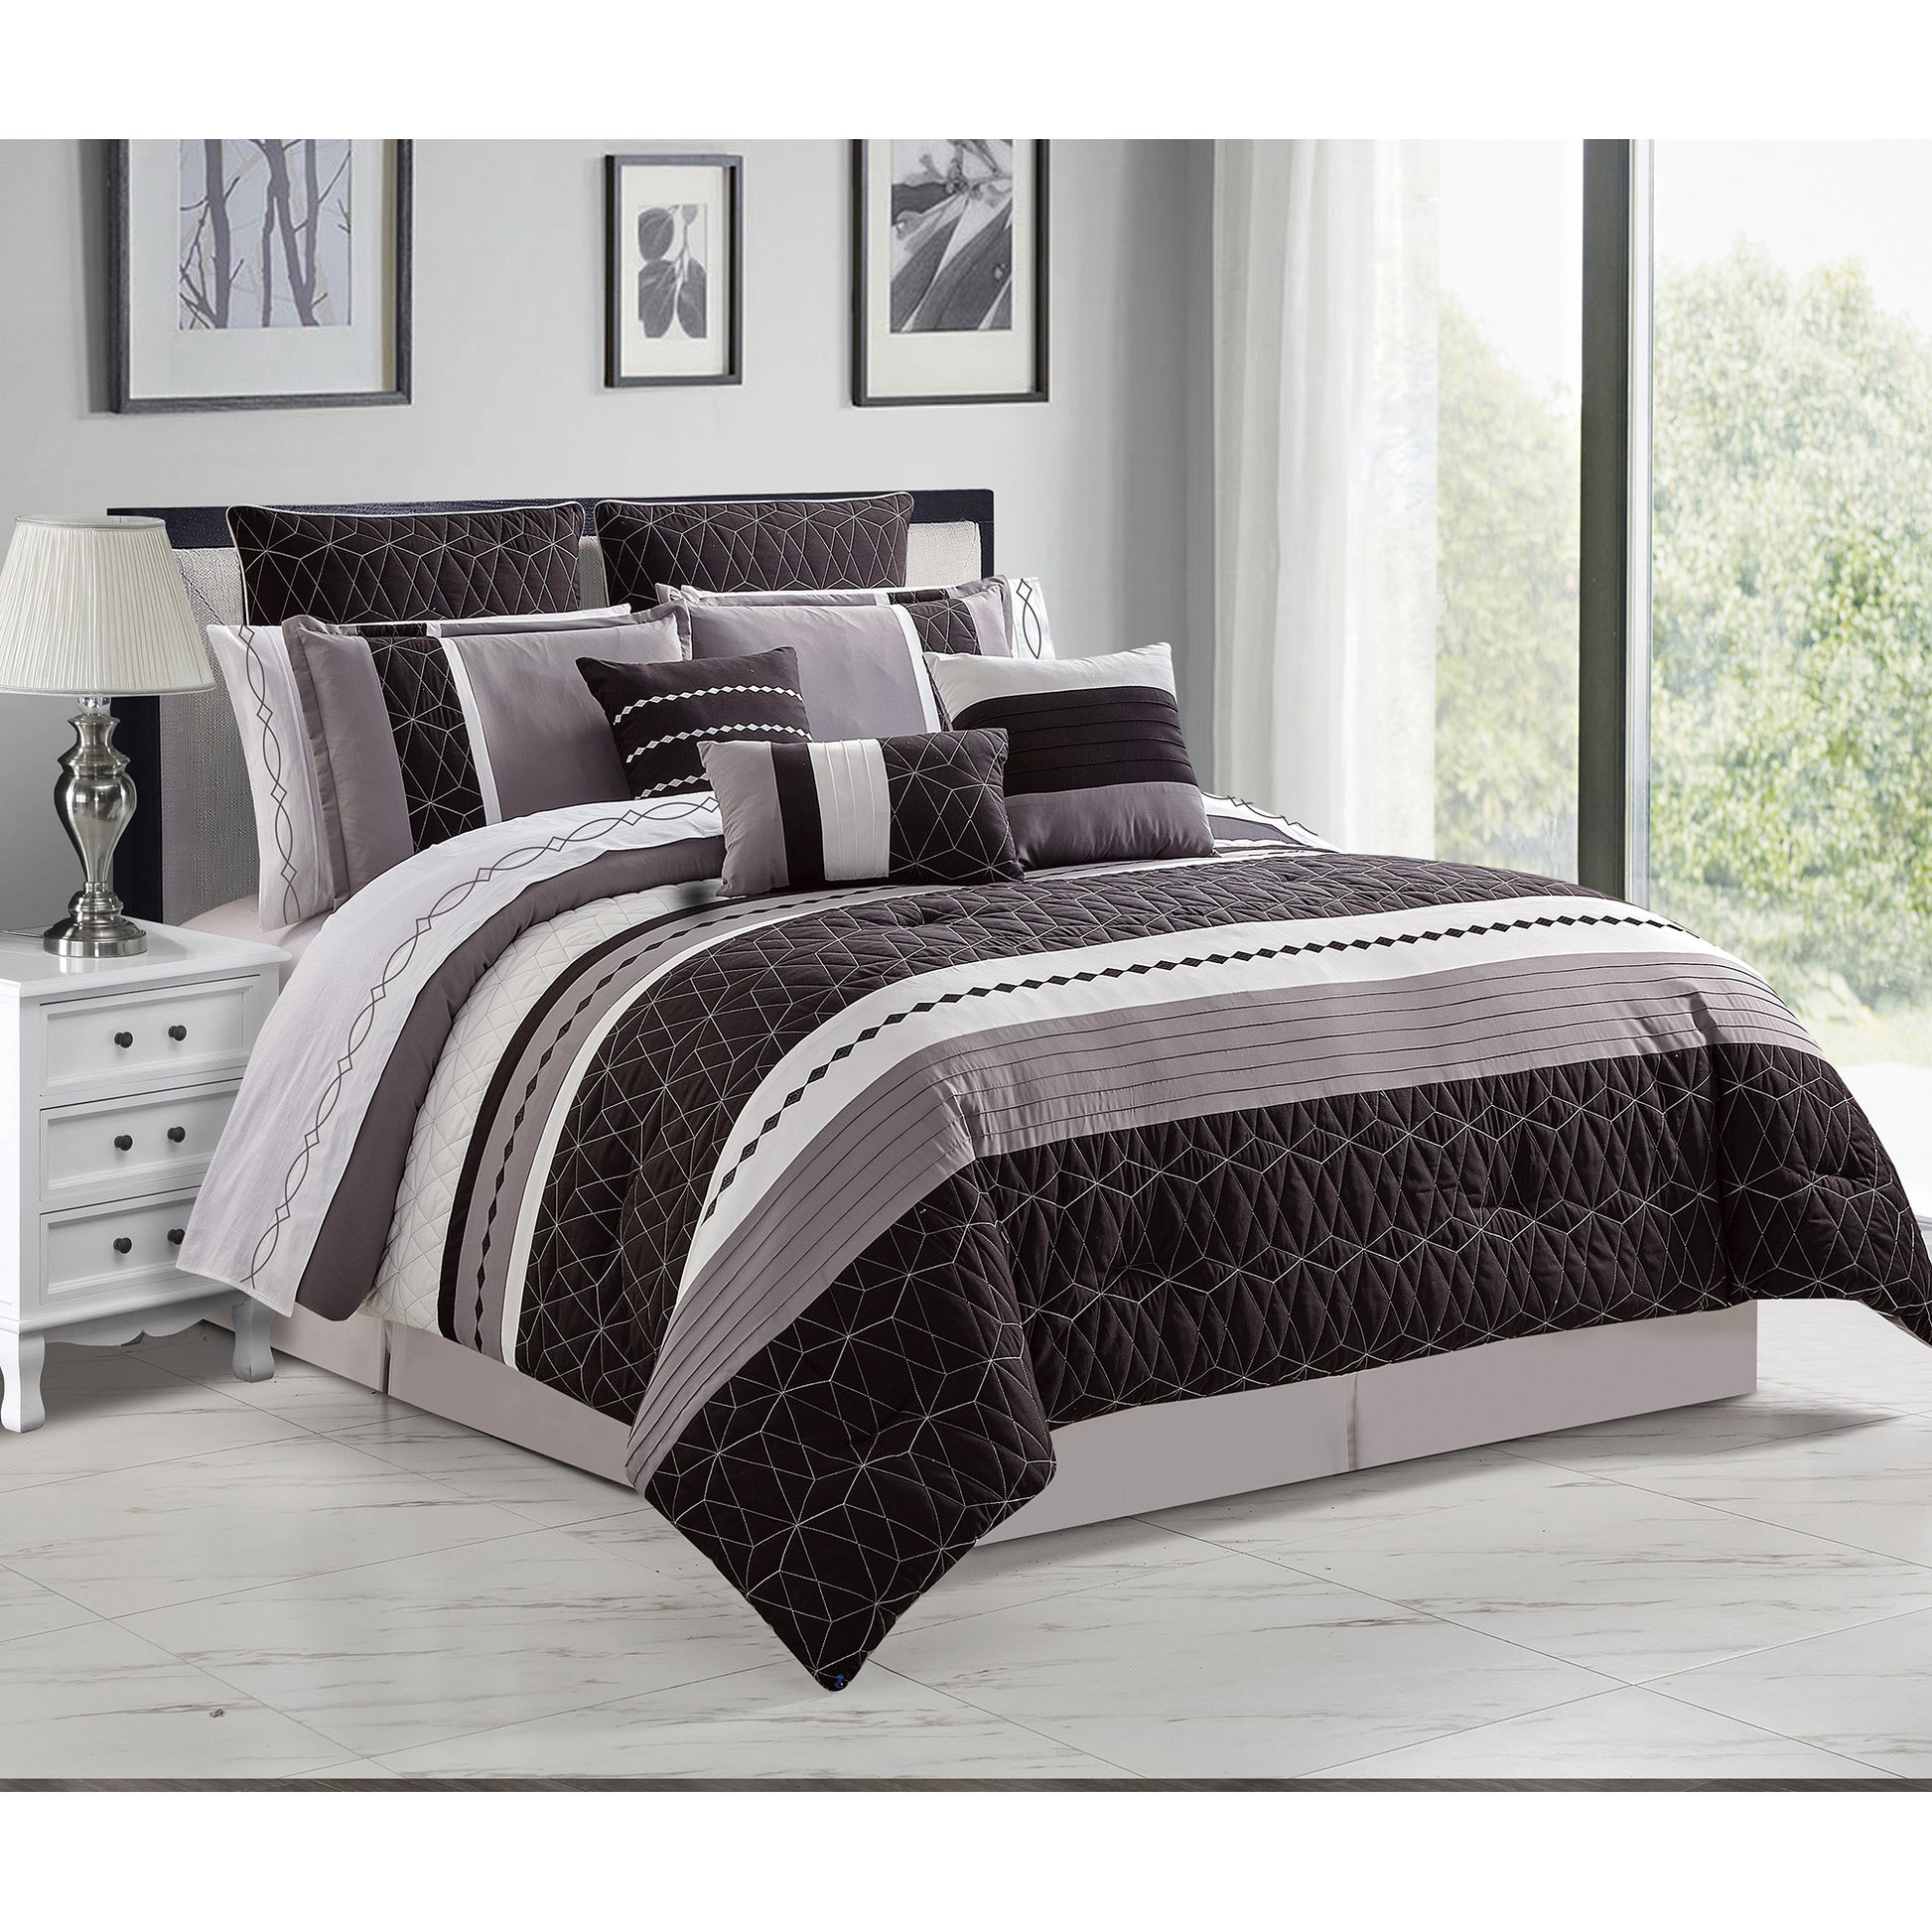 Woven Comforter Bedding Set 7Pcs Queen Axis